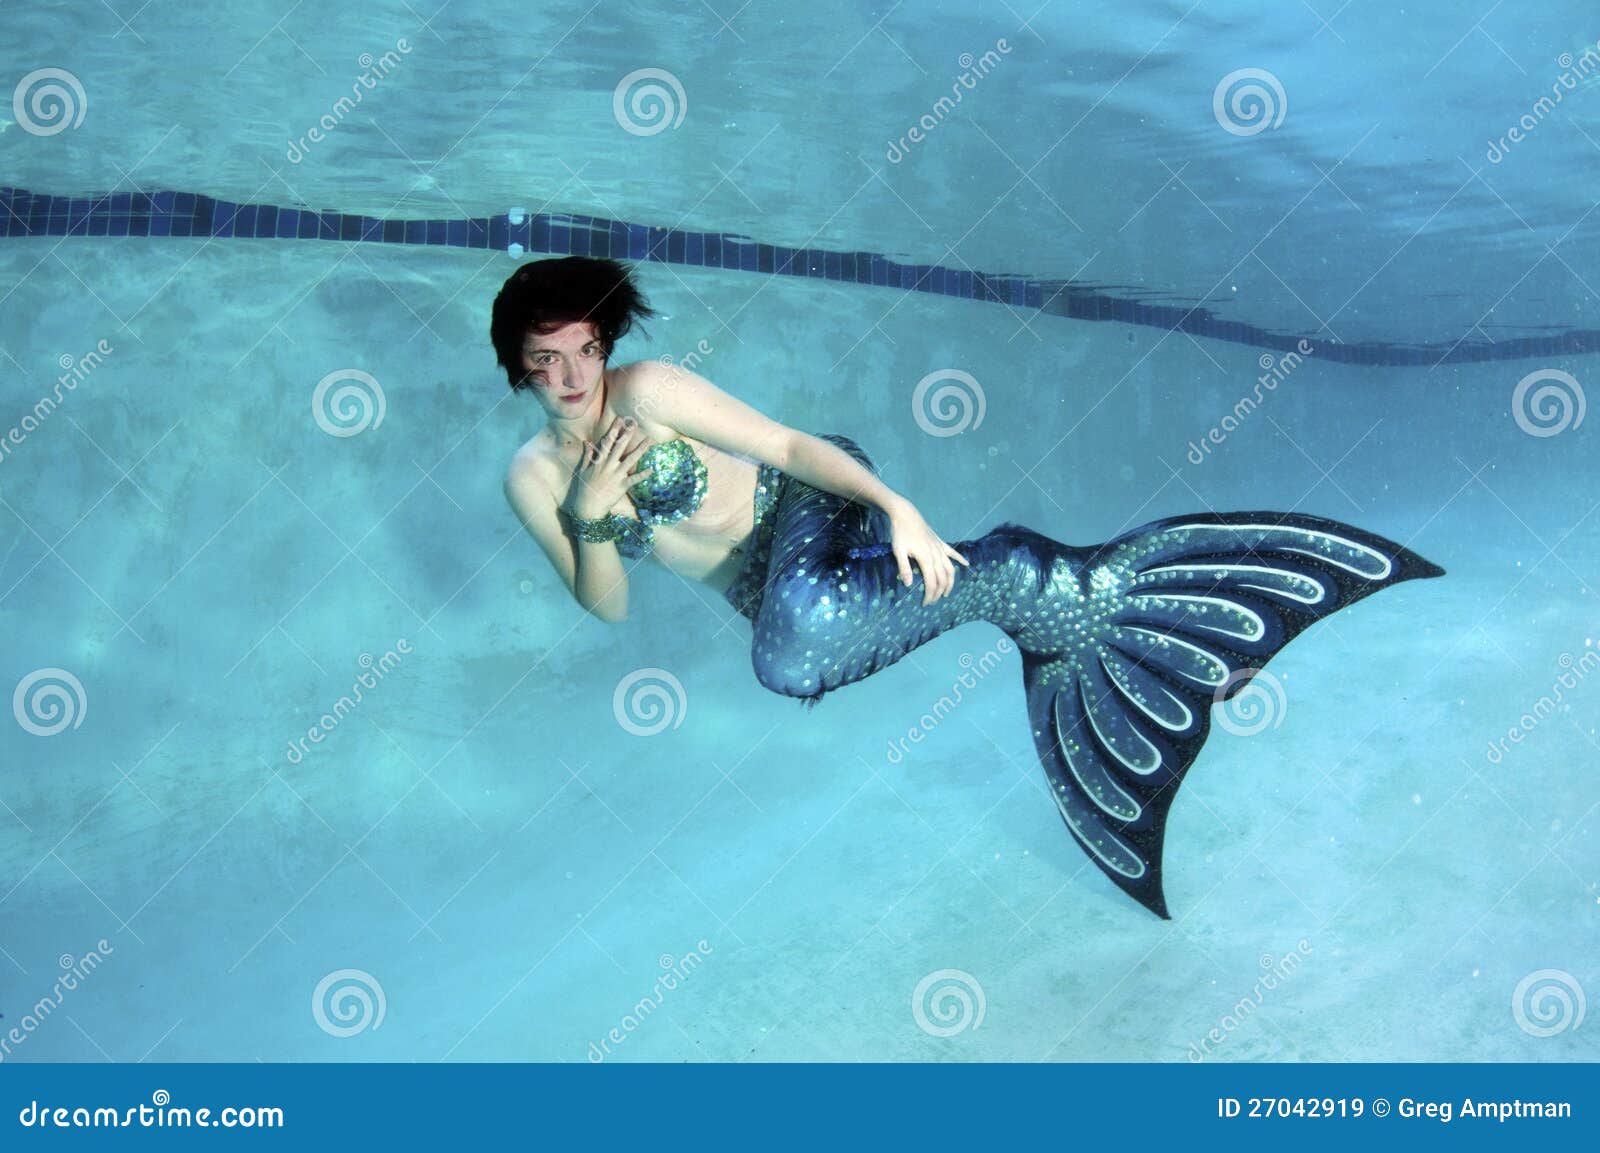 4,448 Pretty Mermaid Stock Photos - Free & Royalty-Free Stock